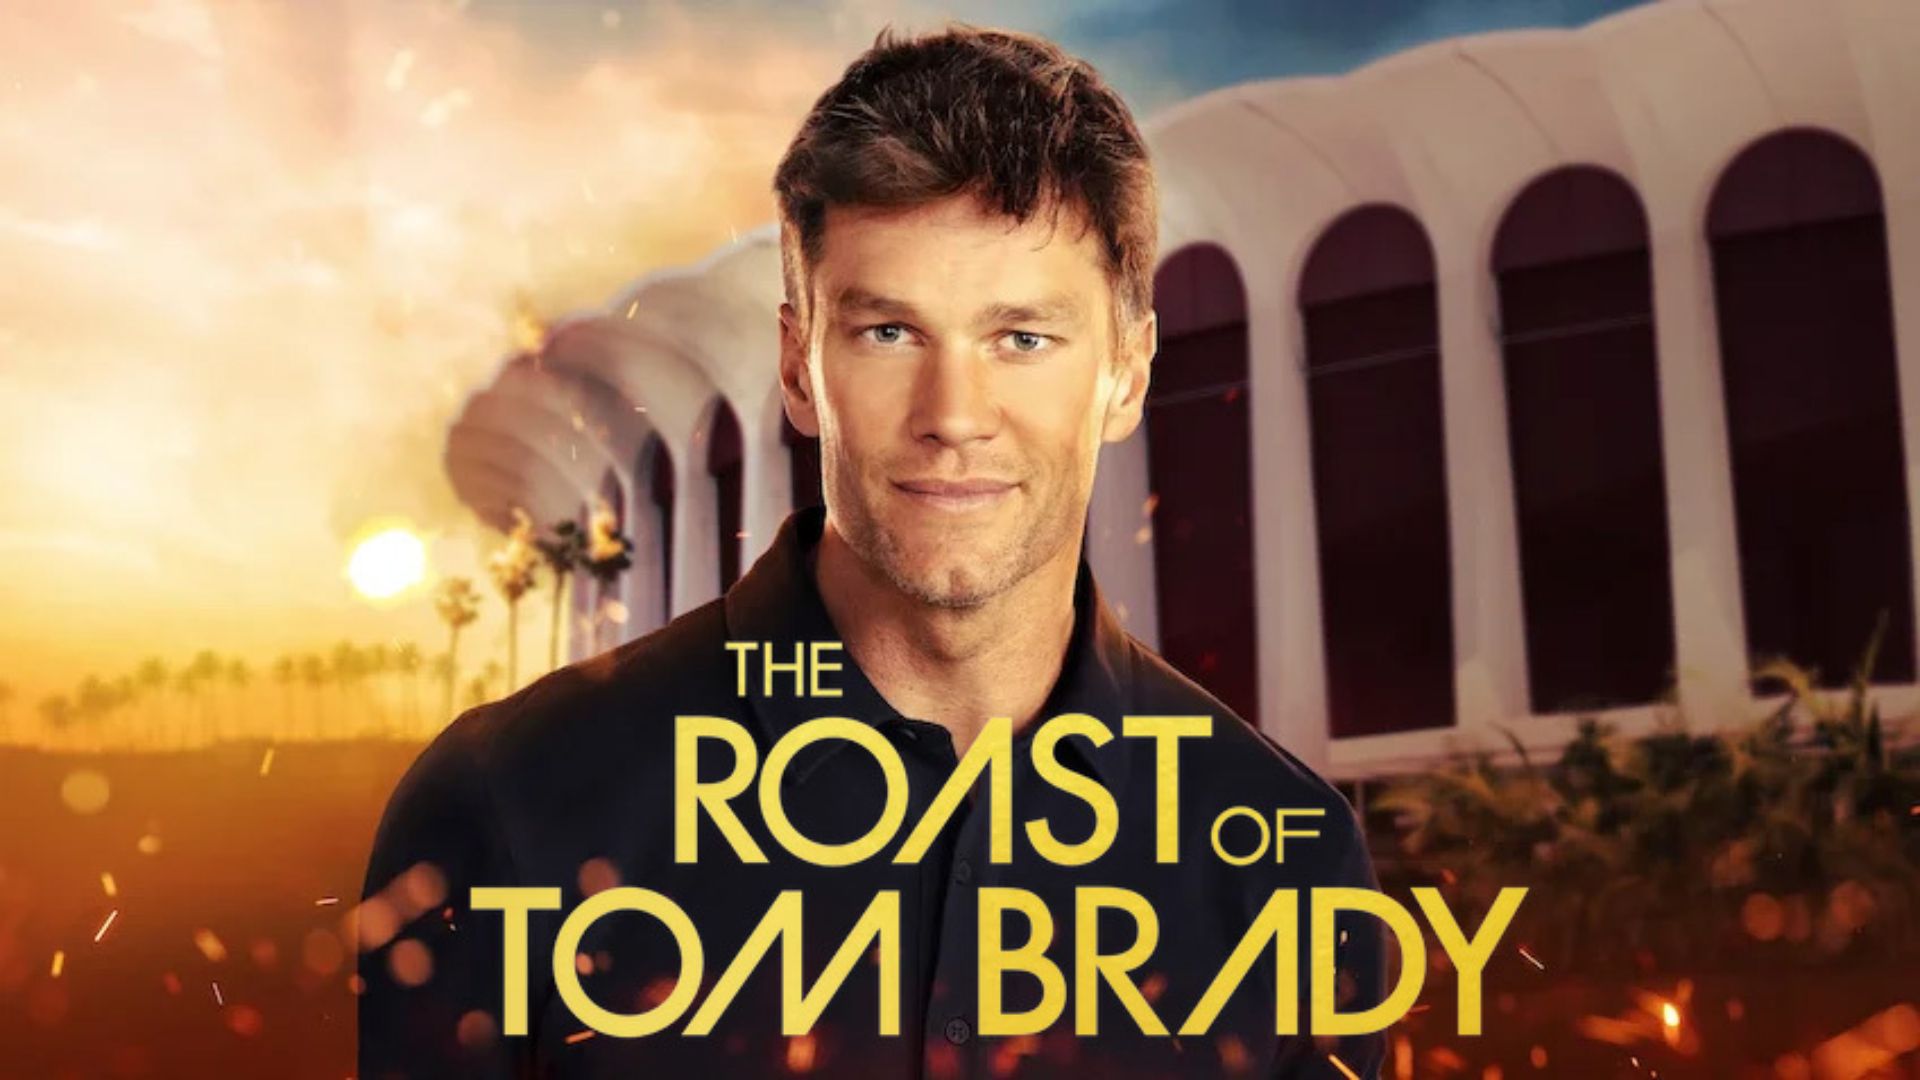 Ben Affleck Has an Angry Tirade at The Roast of Tom Brady